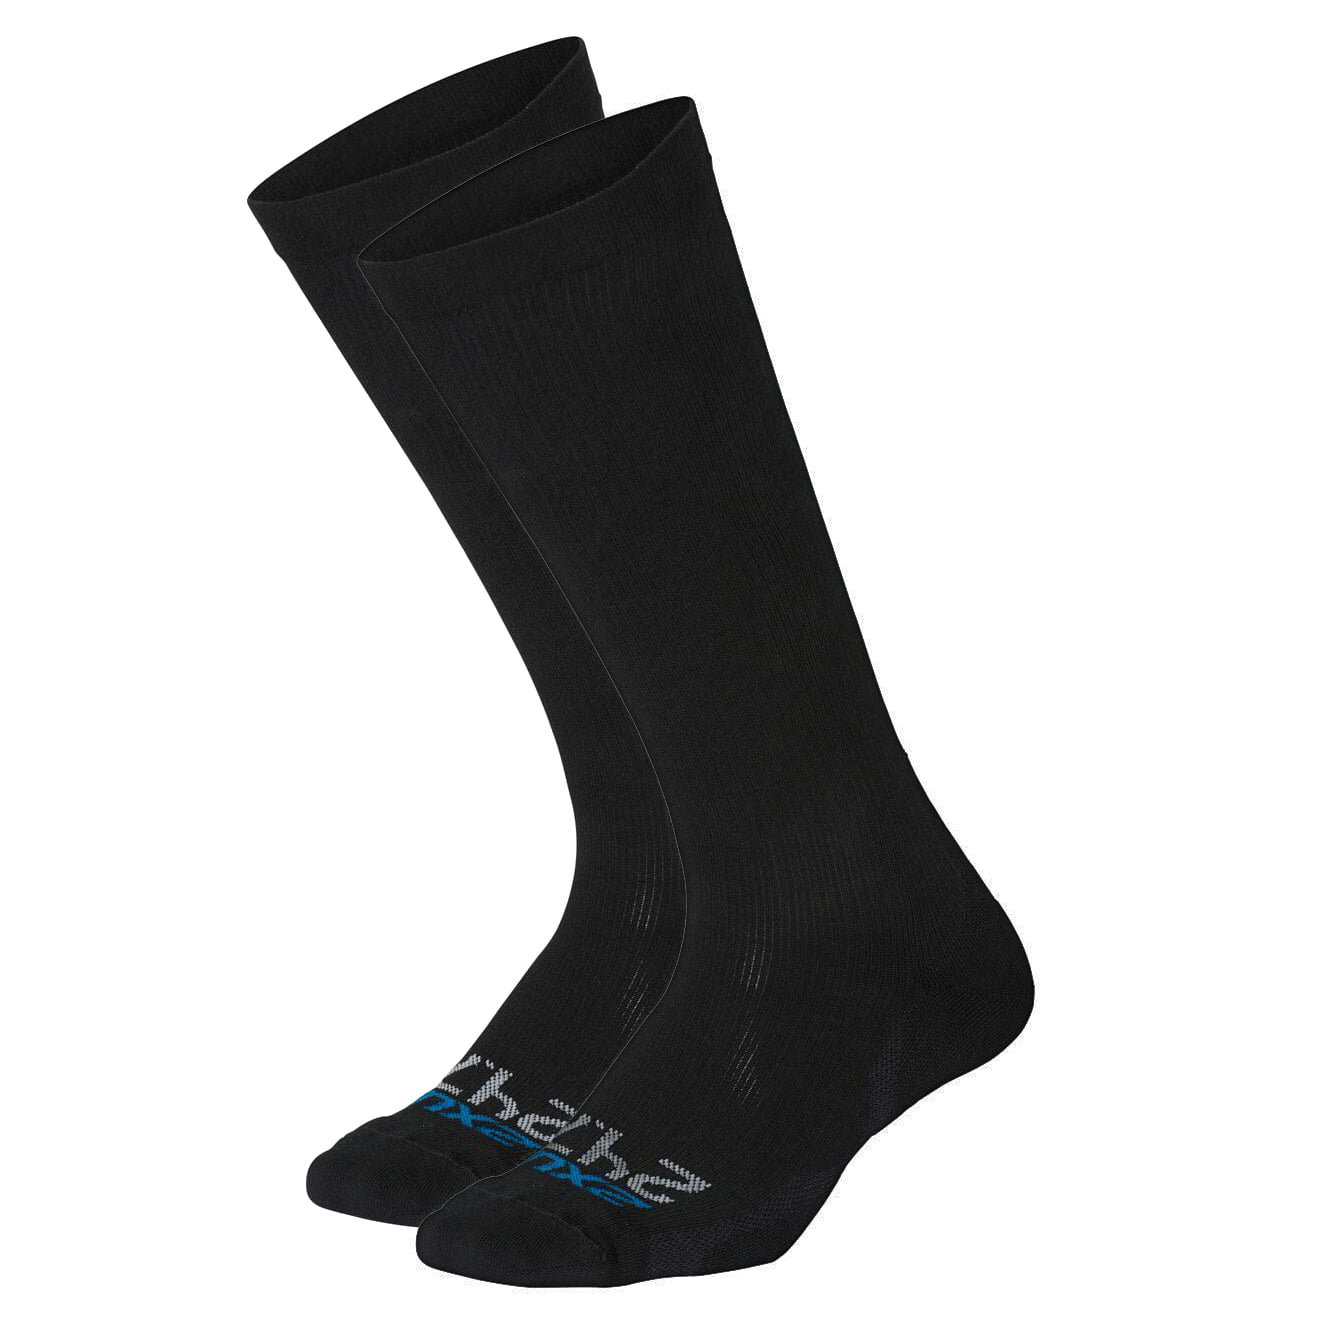 2XU Core Kompression Knee Socks, for men, size M, Triathlon clothes